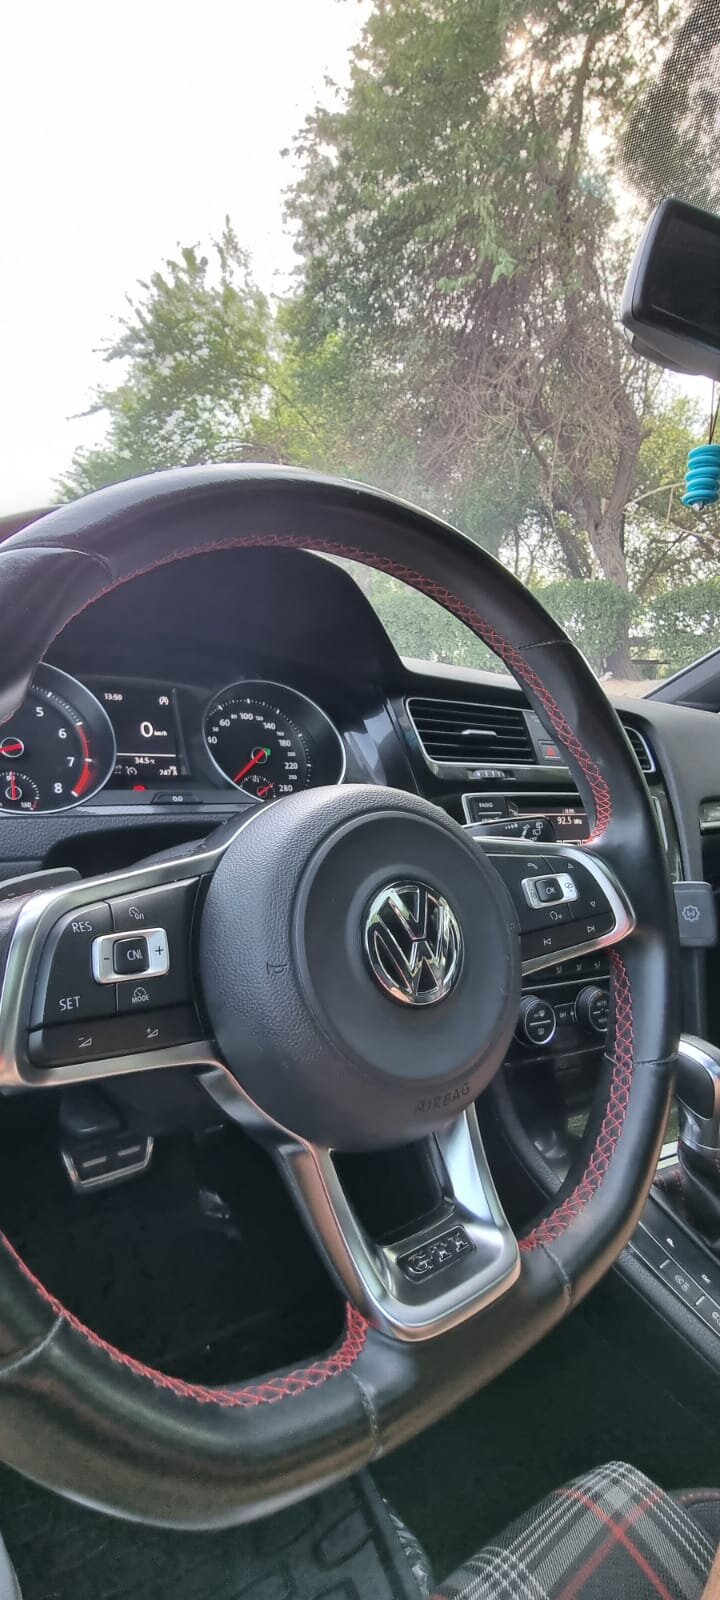 Volkswagen golf gti 2016 فولكس واجن قولف ٢٠١٦5.jpeg